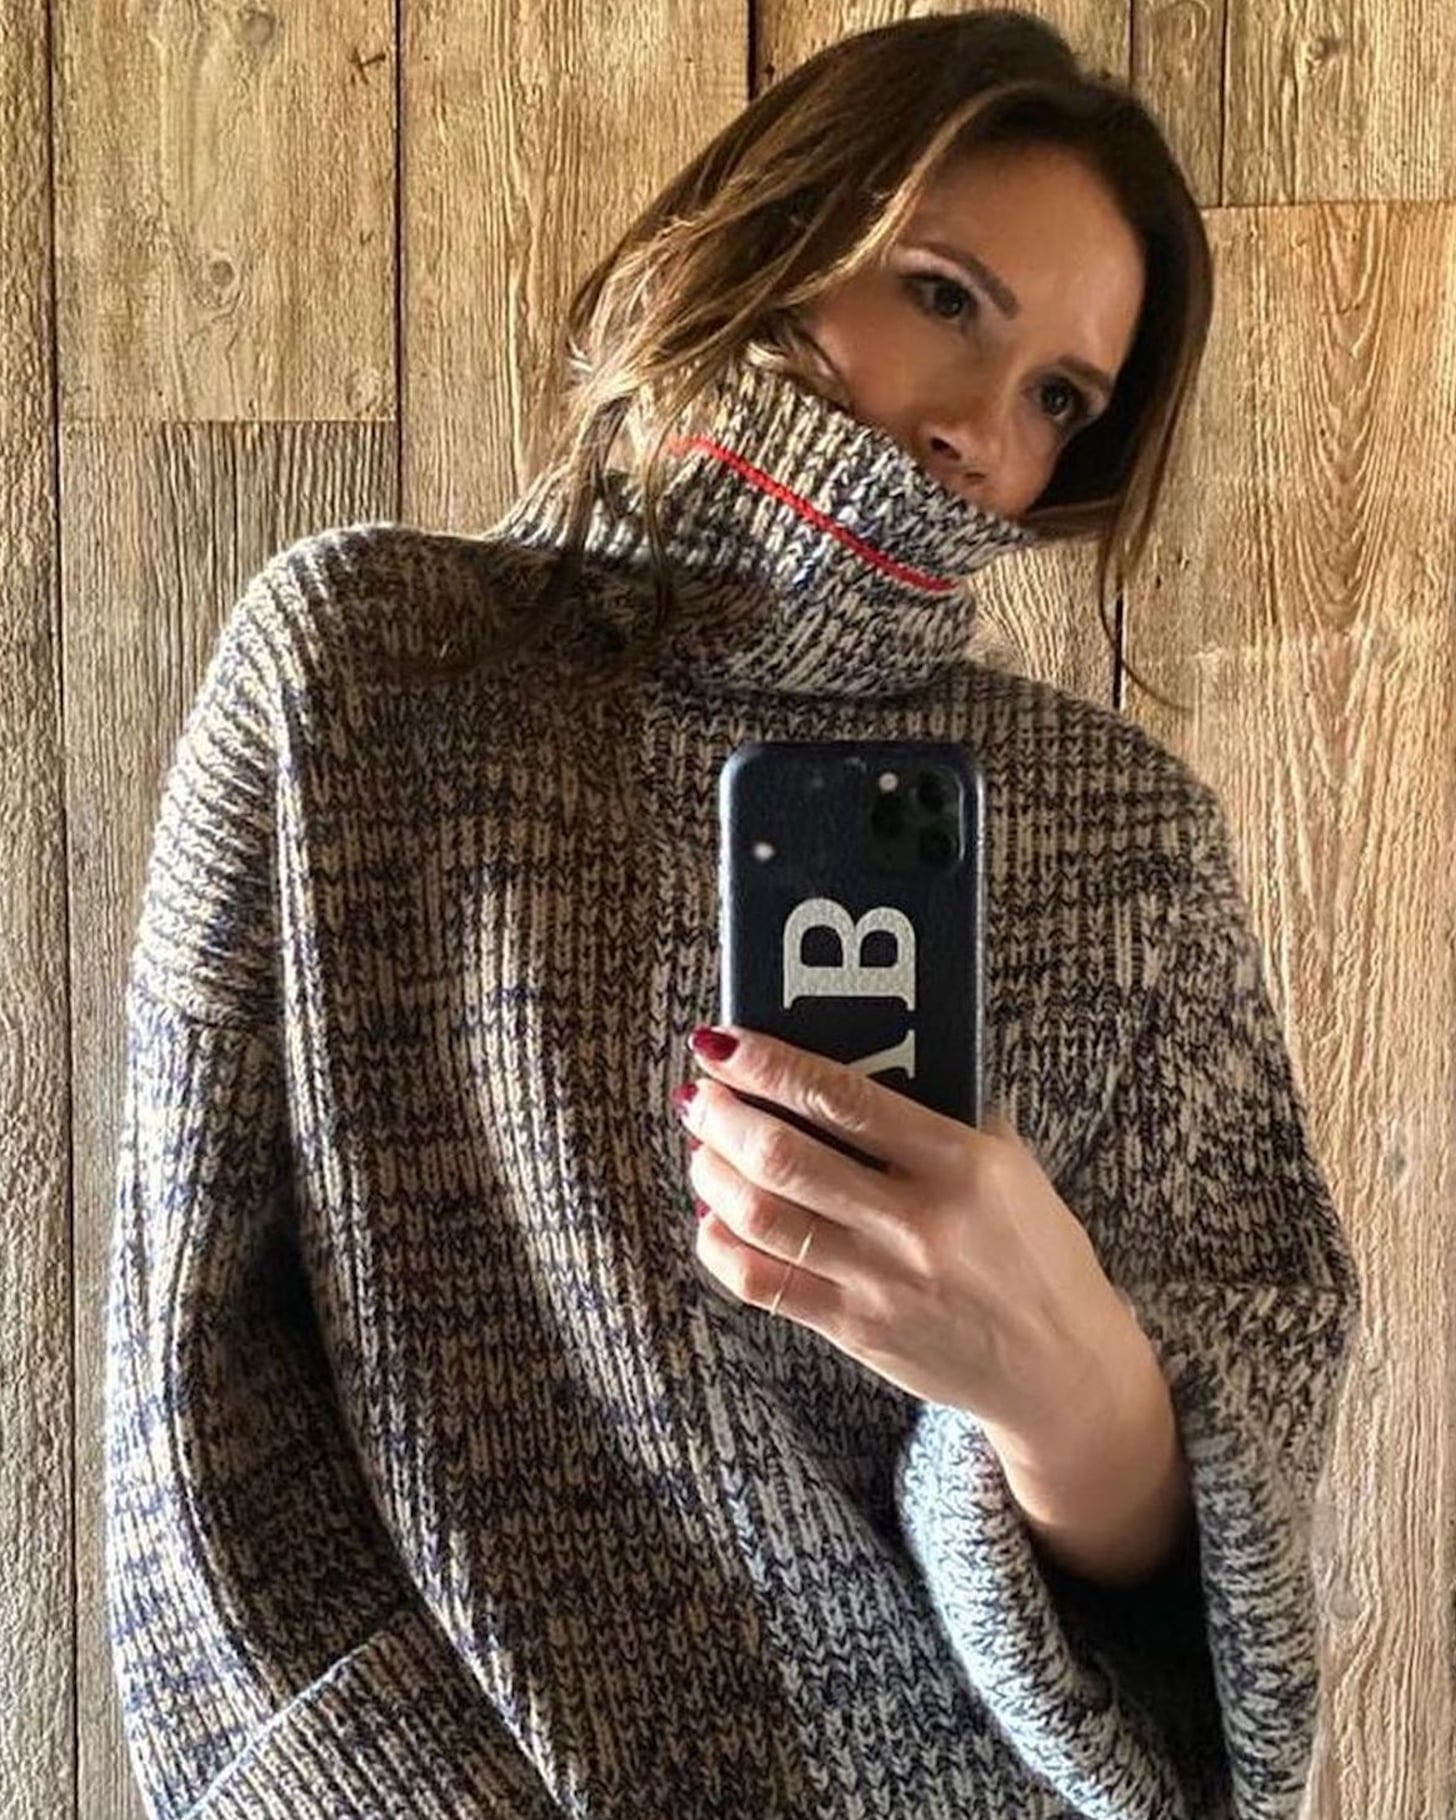 Victoria Beckham Wearing a Knit Turtleneck on Instagram 2020